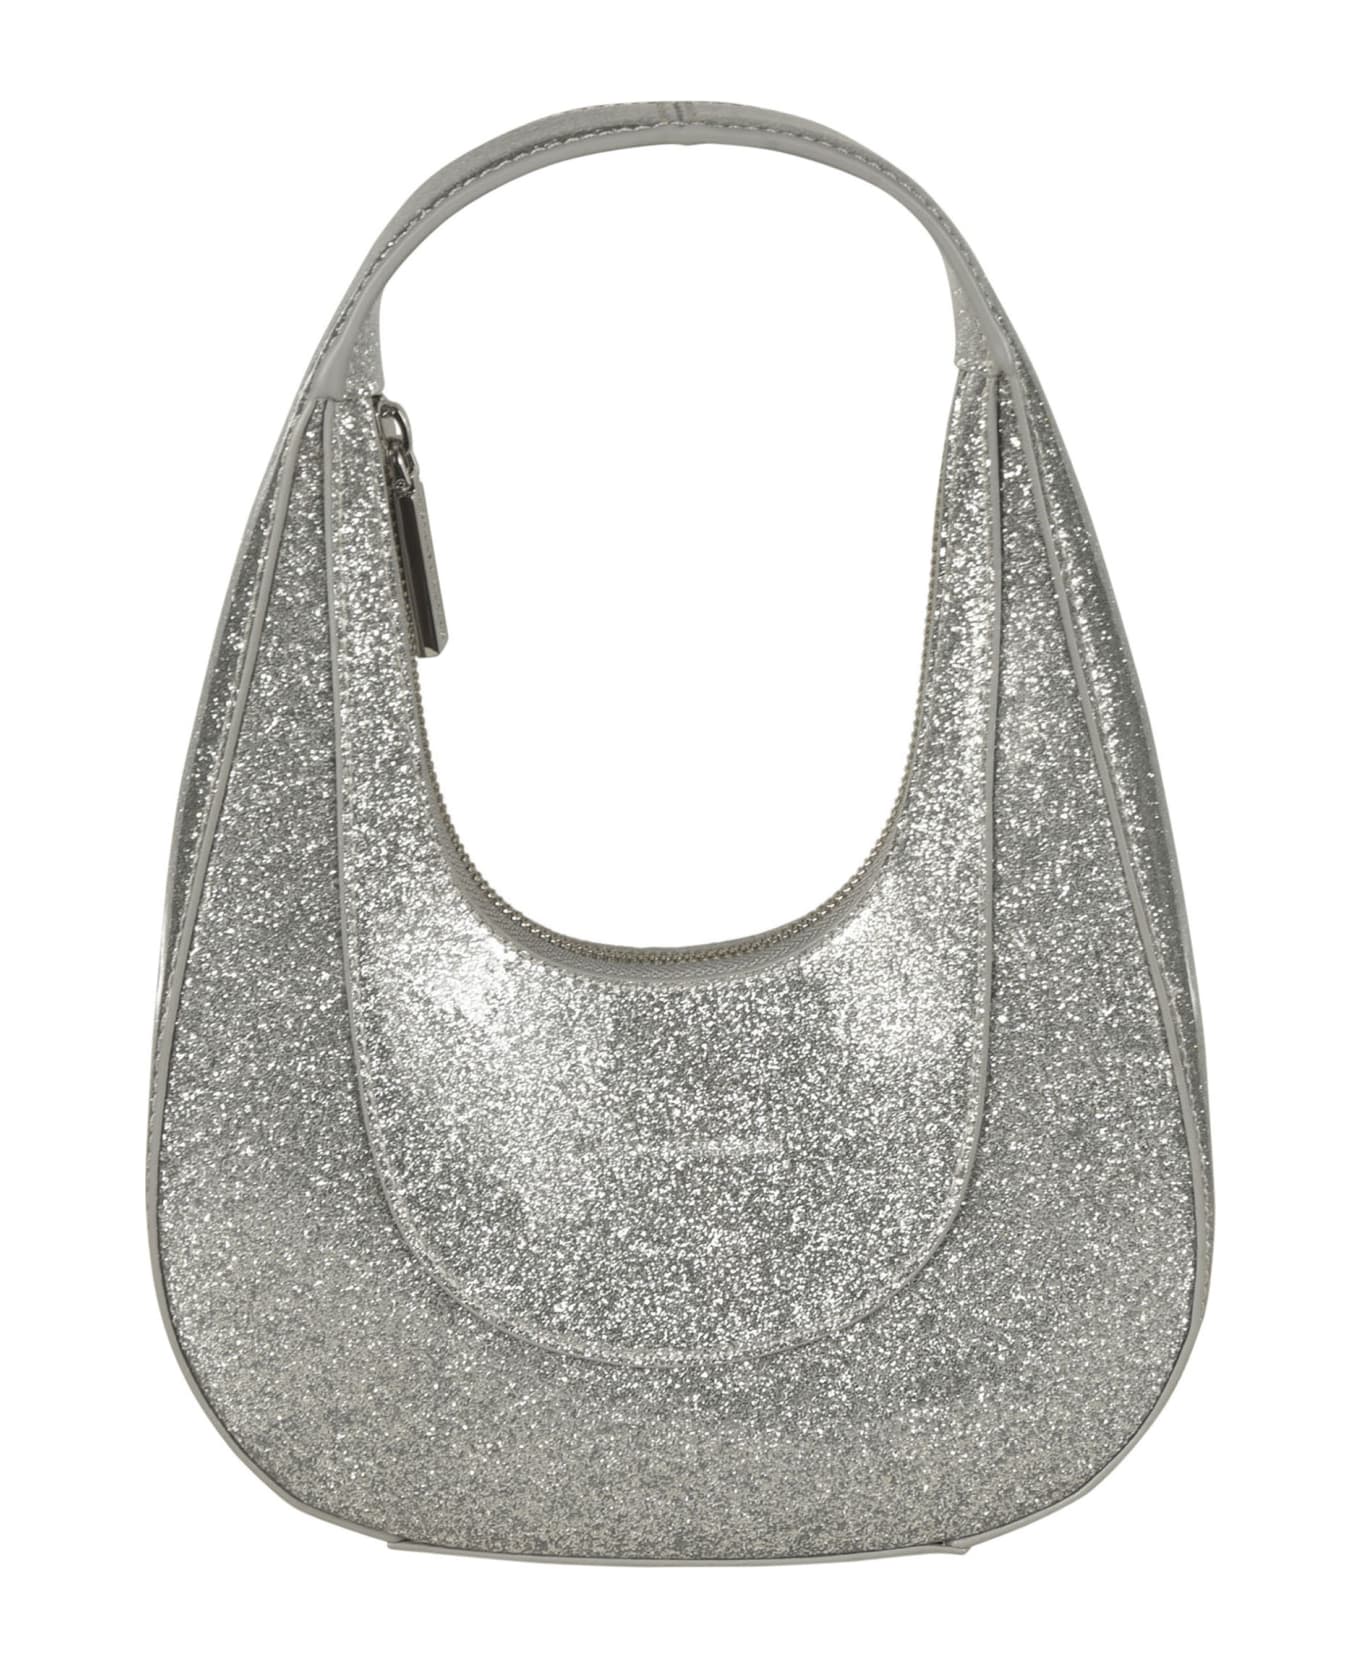 Chiara Ferragni Glittery Shoulder Bag - Argento